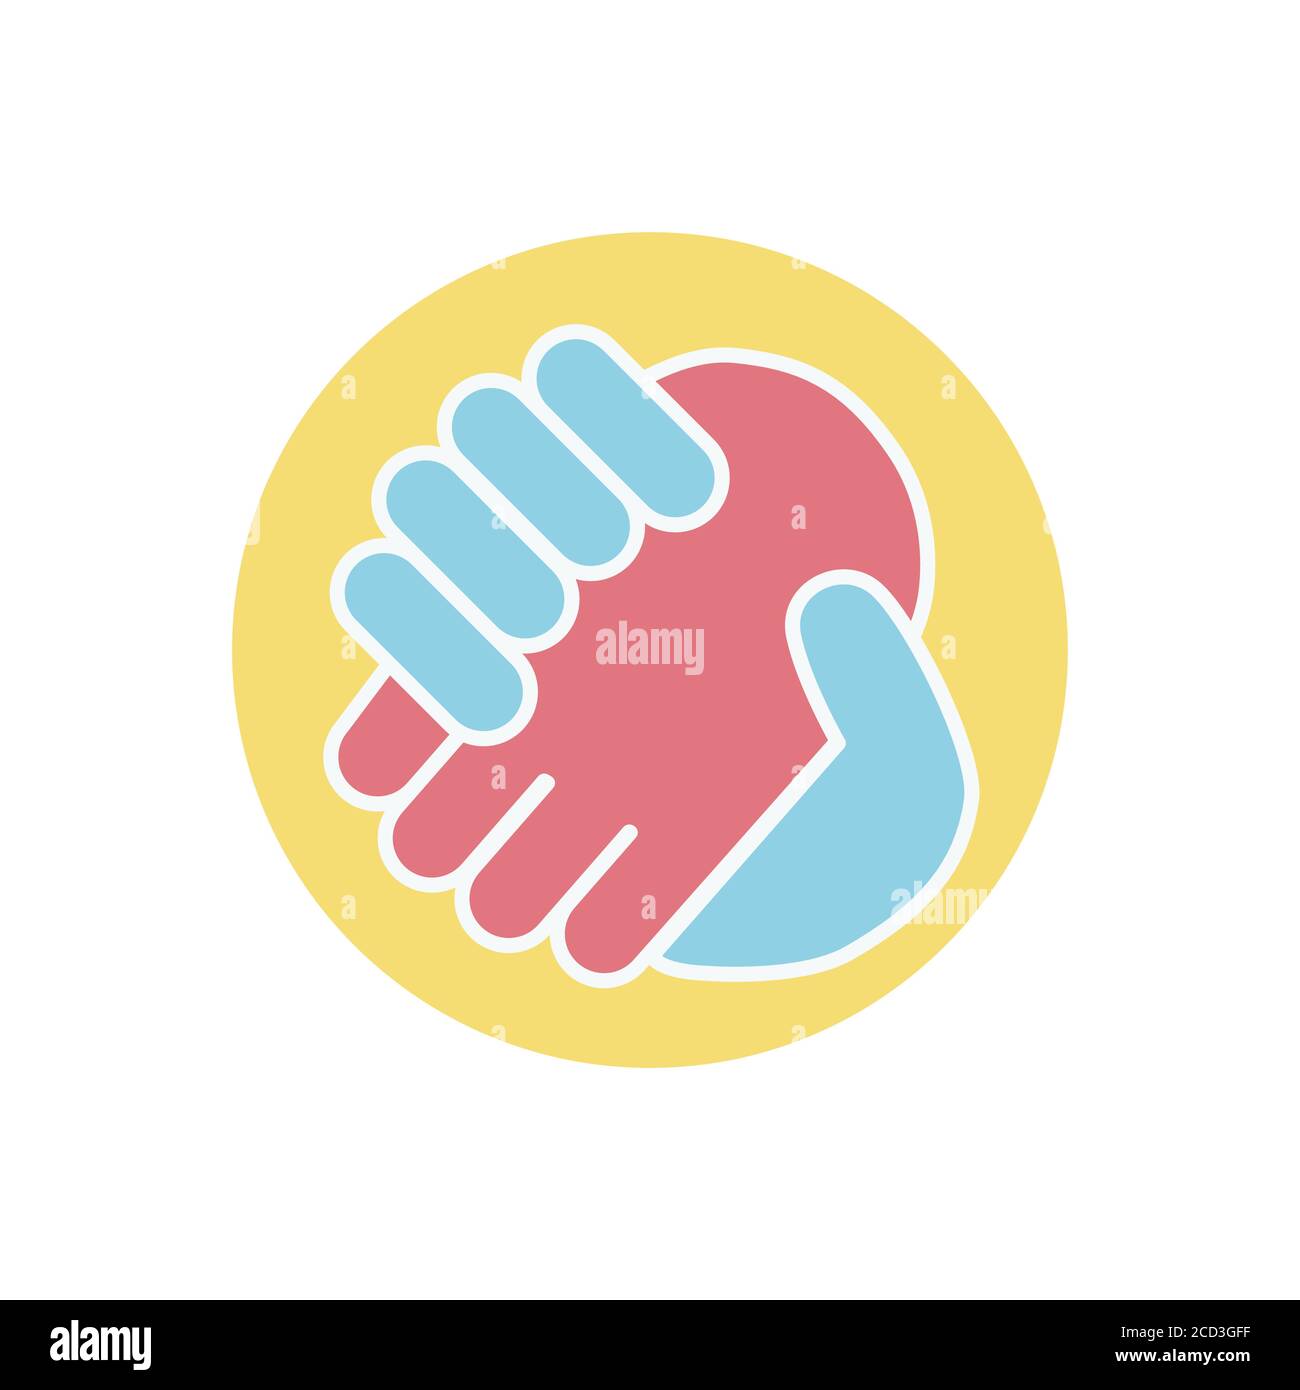 Handshake Friendship Partnership. Different colored hands. Symbol for business, friendship or social integration. Stock Vector